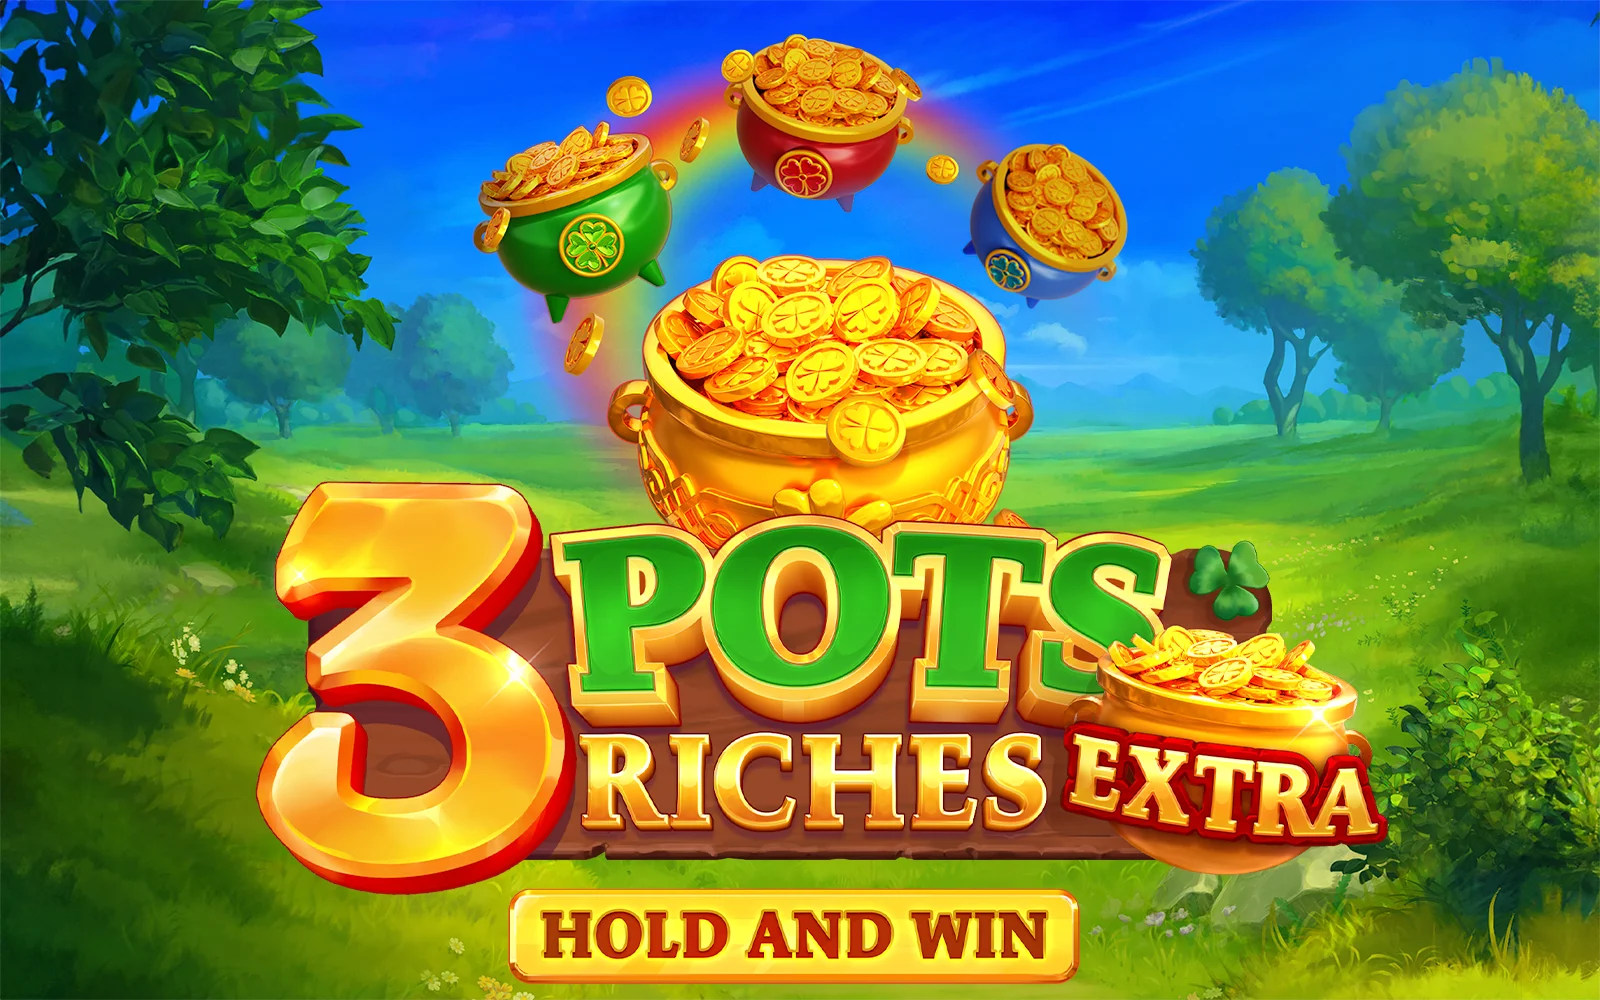 Juega a 3 Pots Riches Extra: Hold and Win en el casino en línea de Starcasino.be